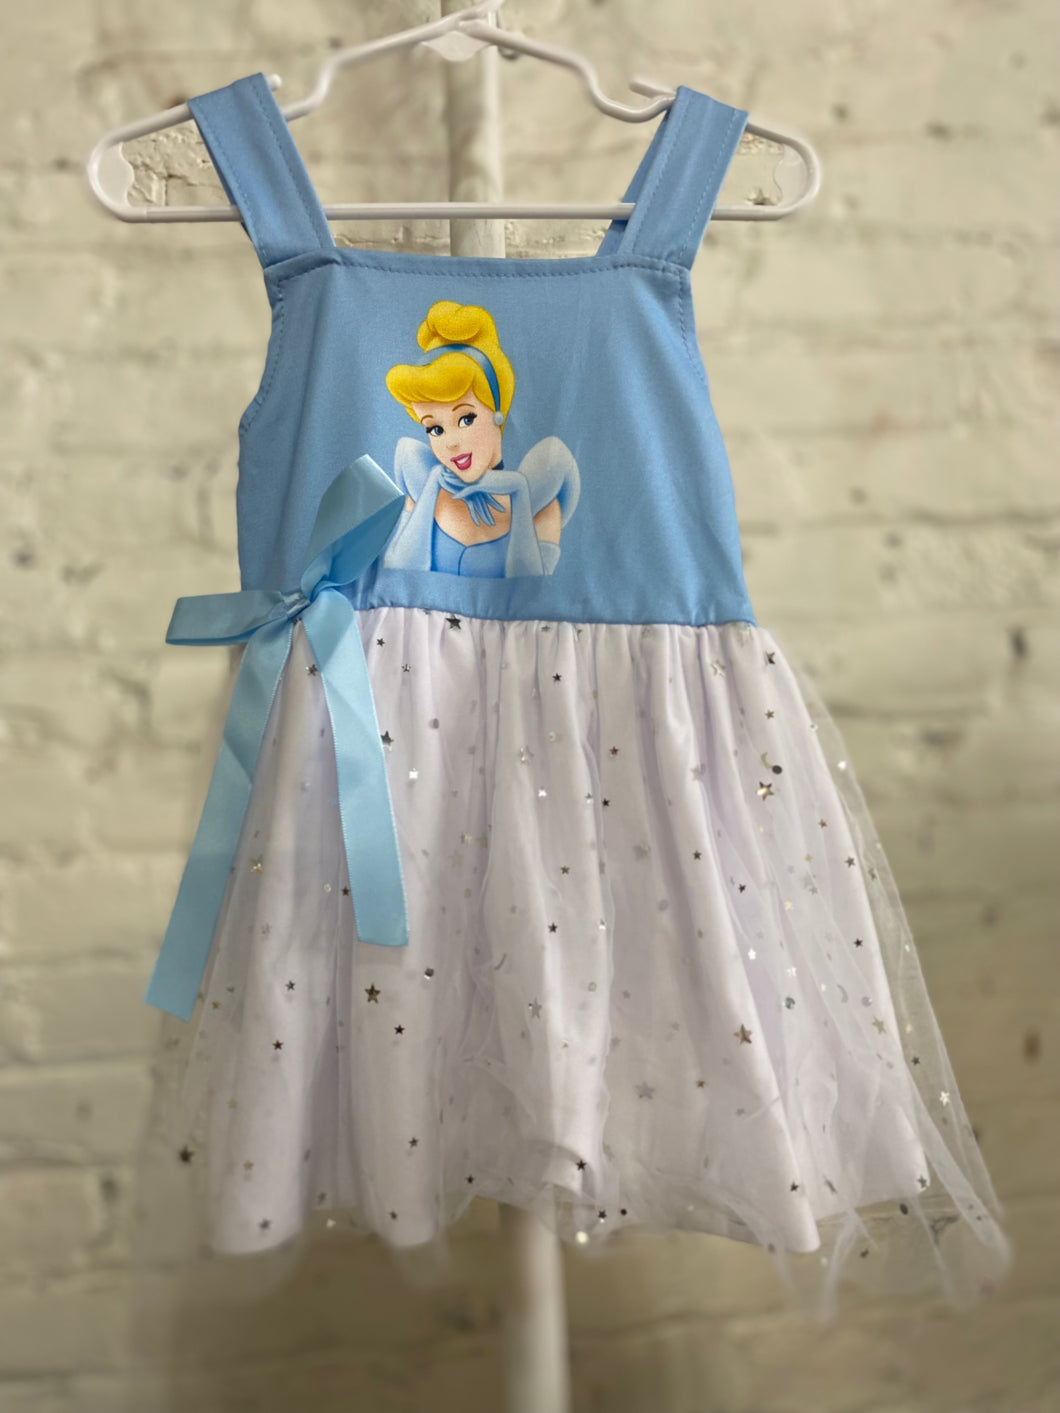 Cinderella princess tulle dress